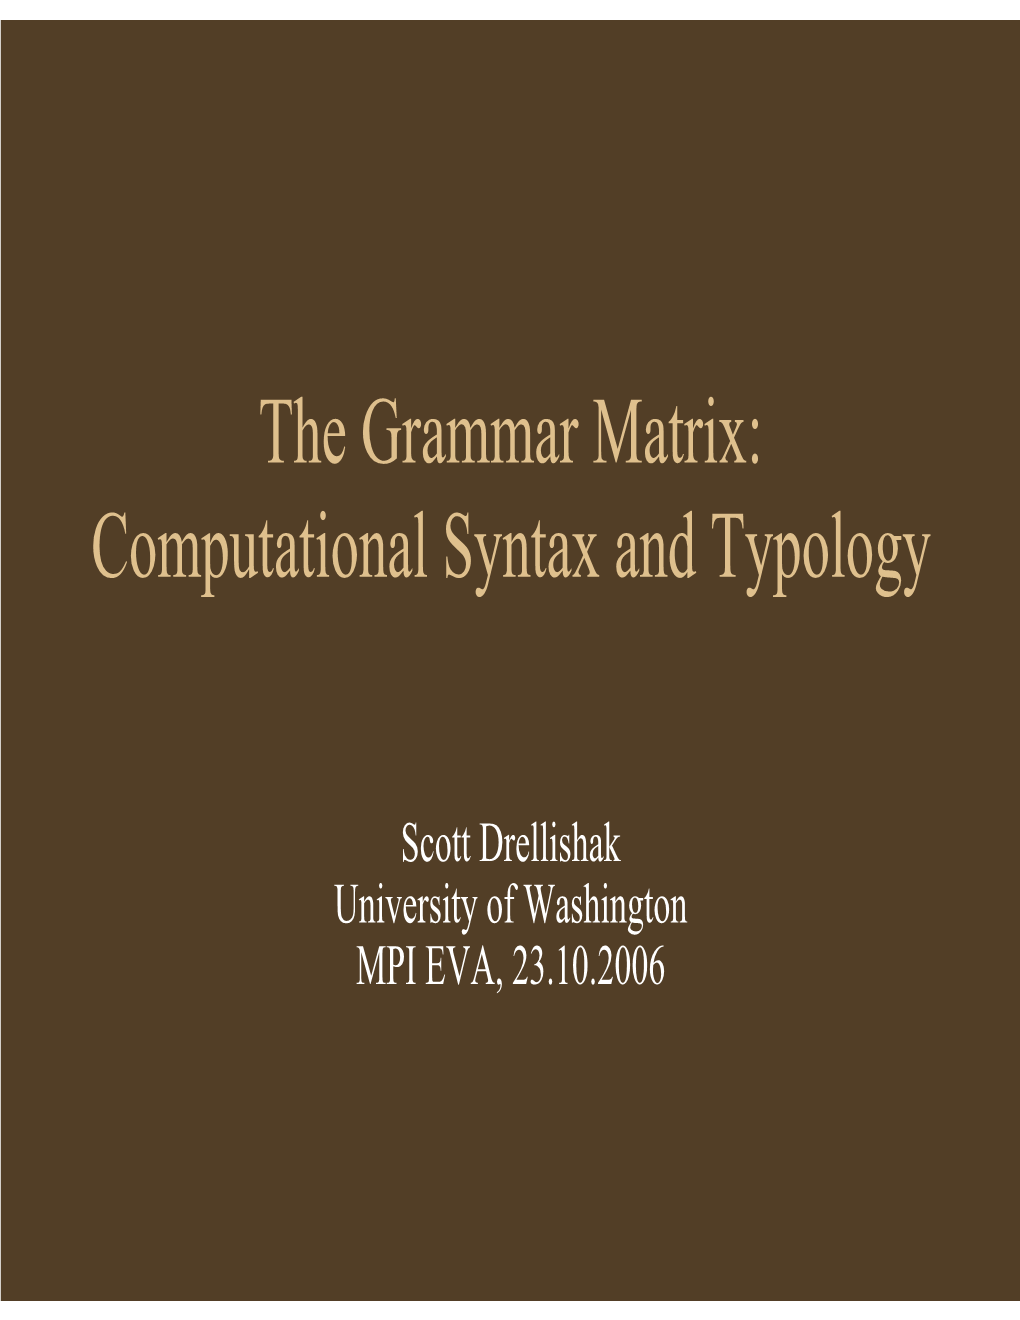 The Grammar Matrix: Computational Syntax and Typology